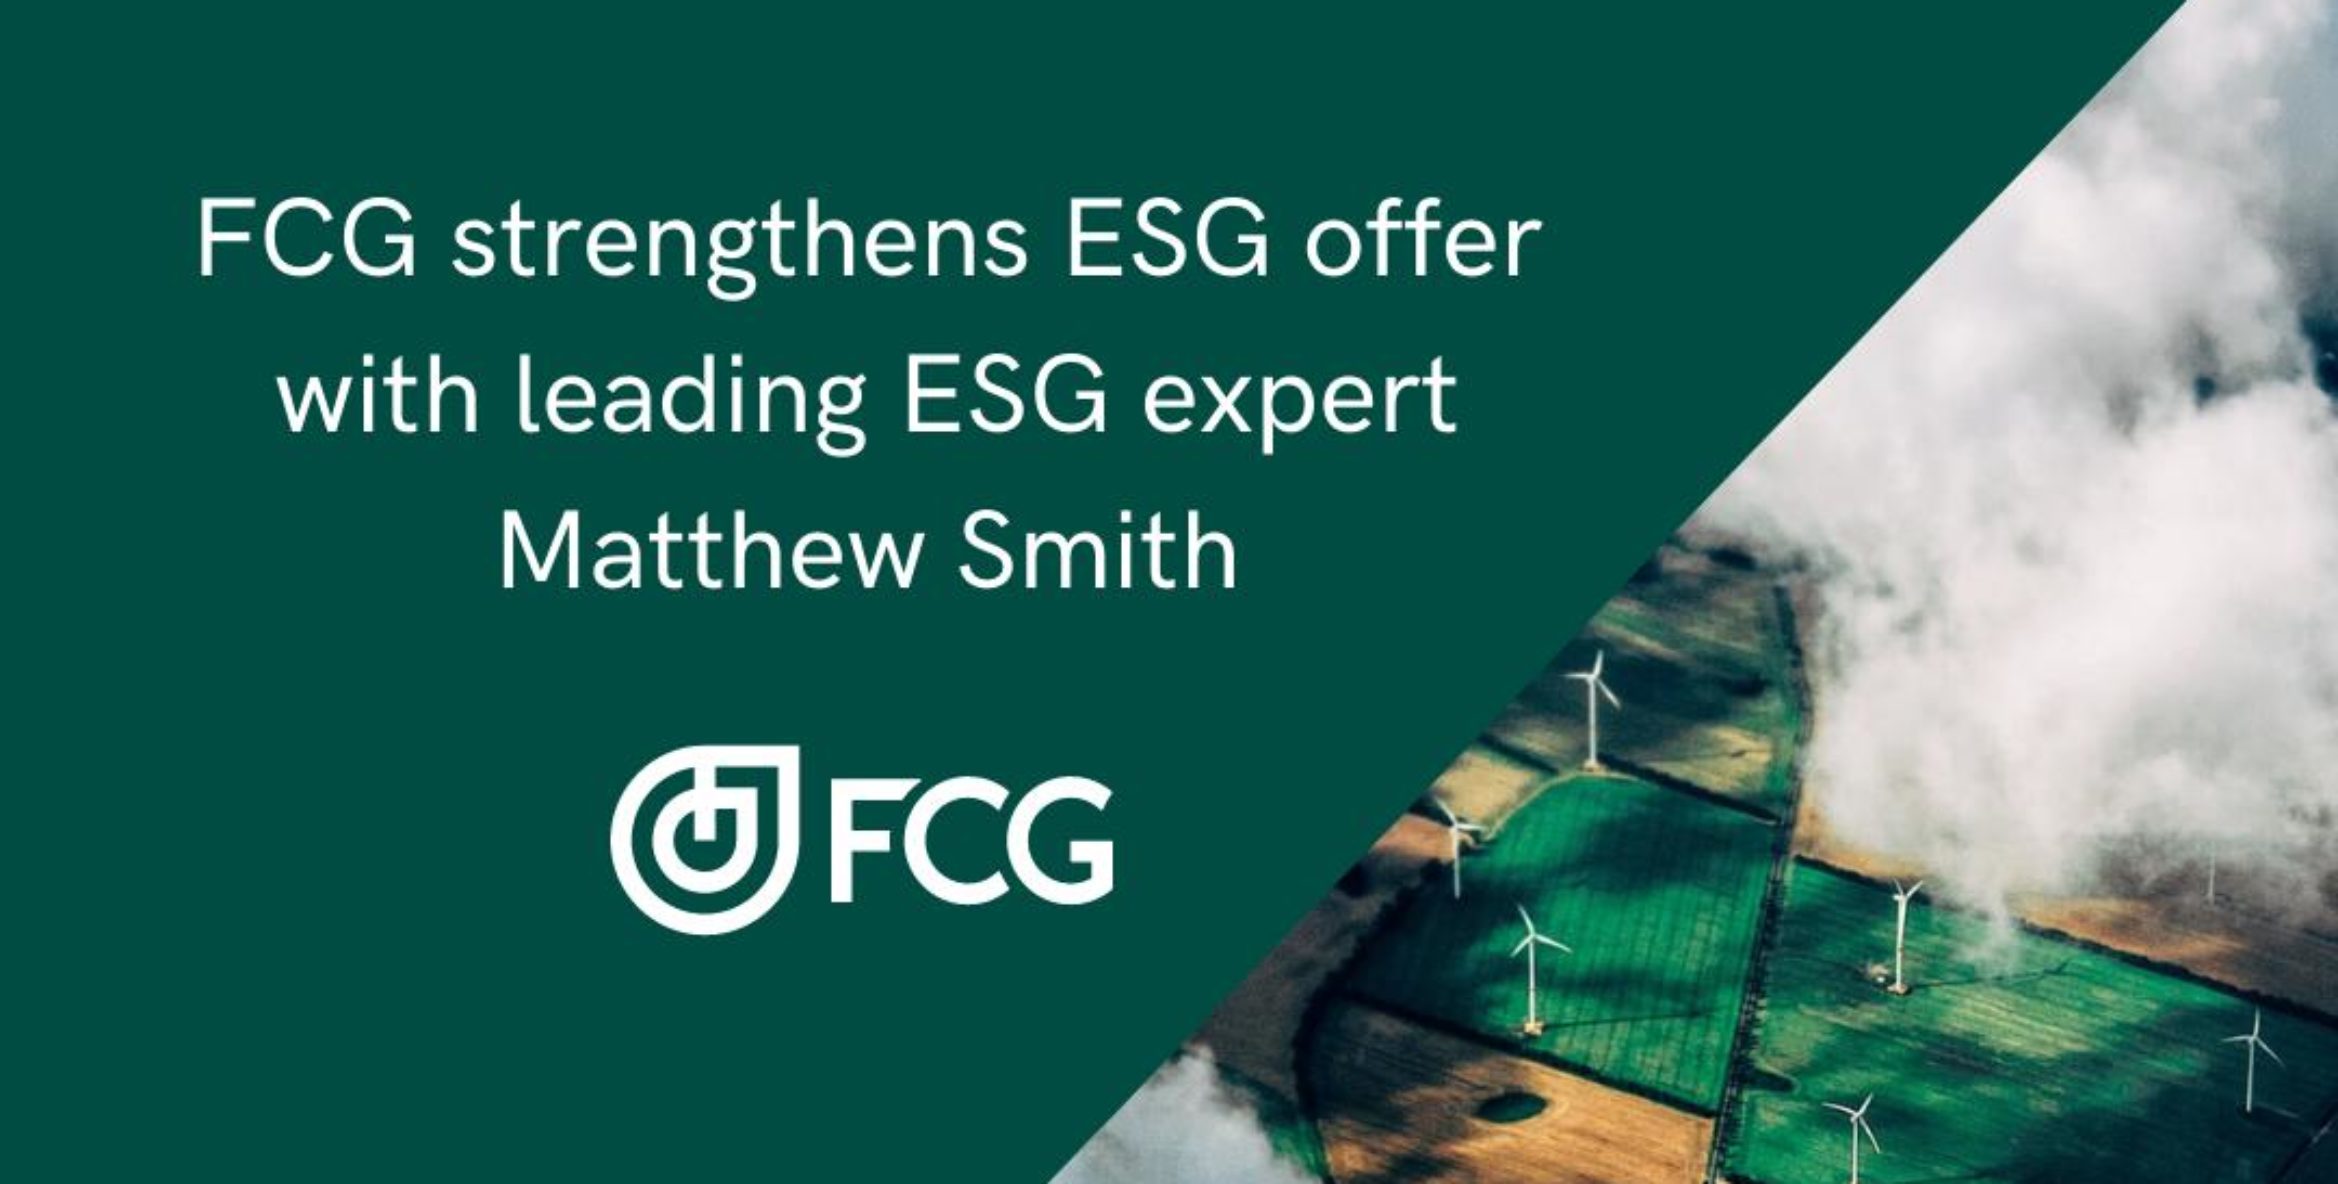 FCG strenghtens ESG offer with leading ESG expert Matthew Smith